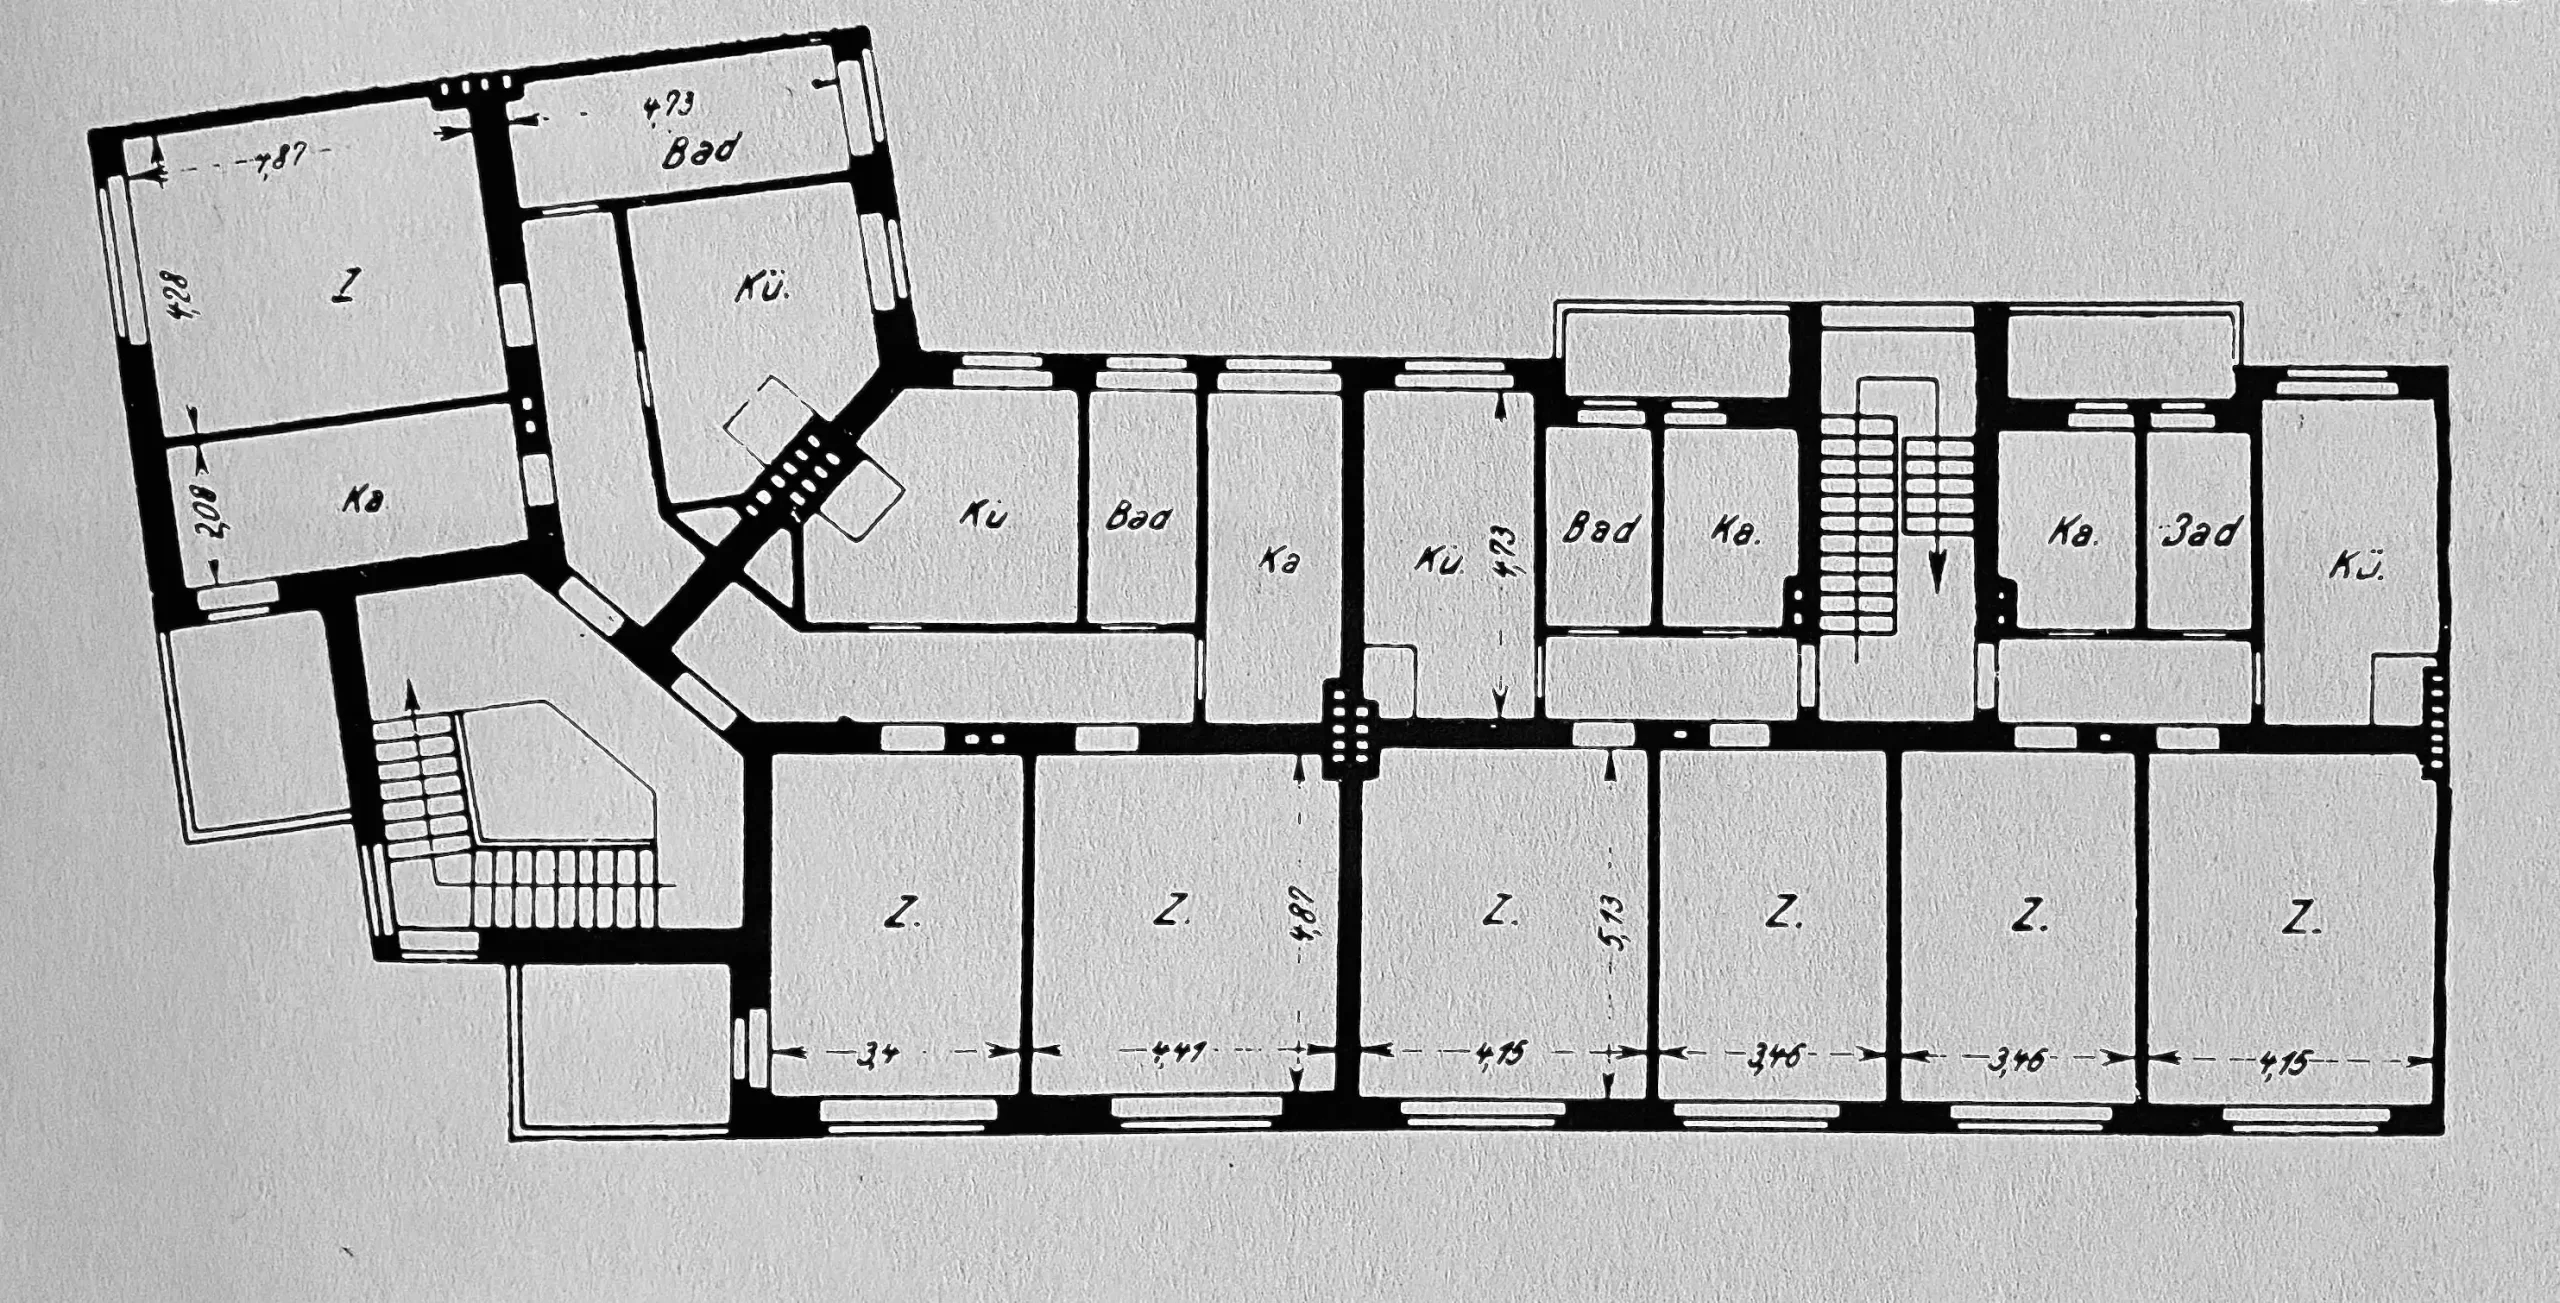 Sonnenhof, 1925-1927. Architect: Erwin Gutkind. Floor plan section